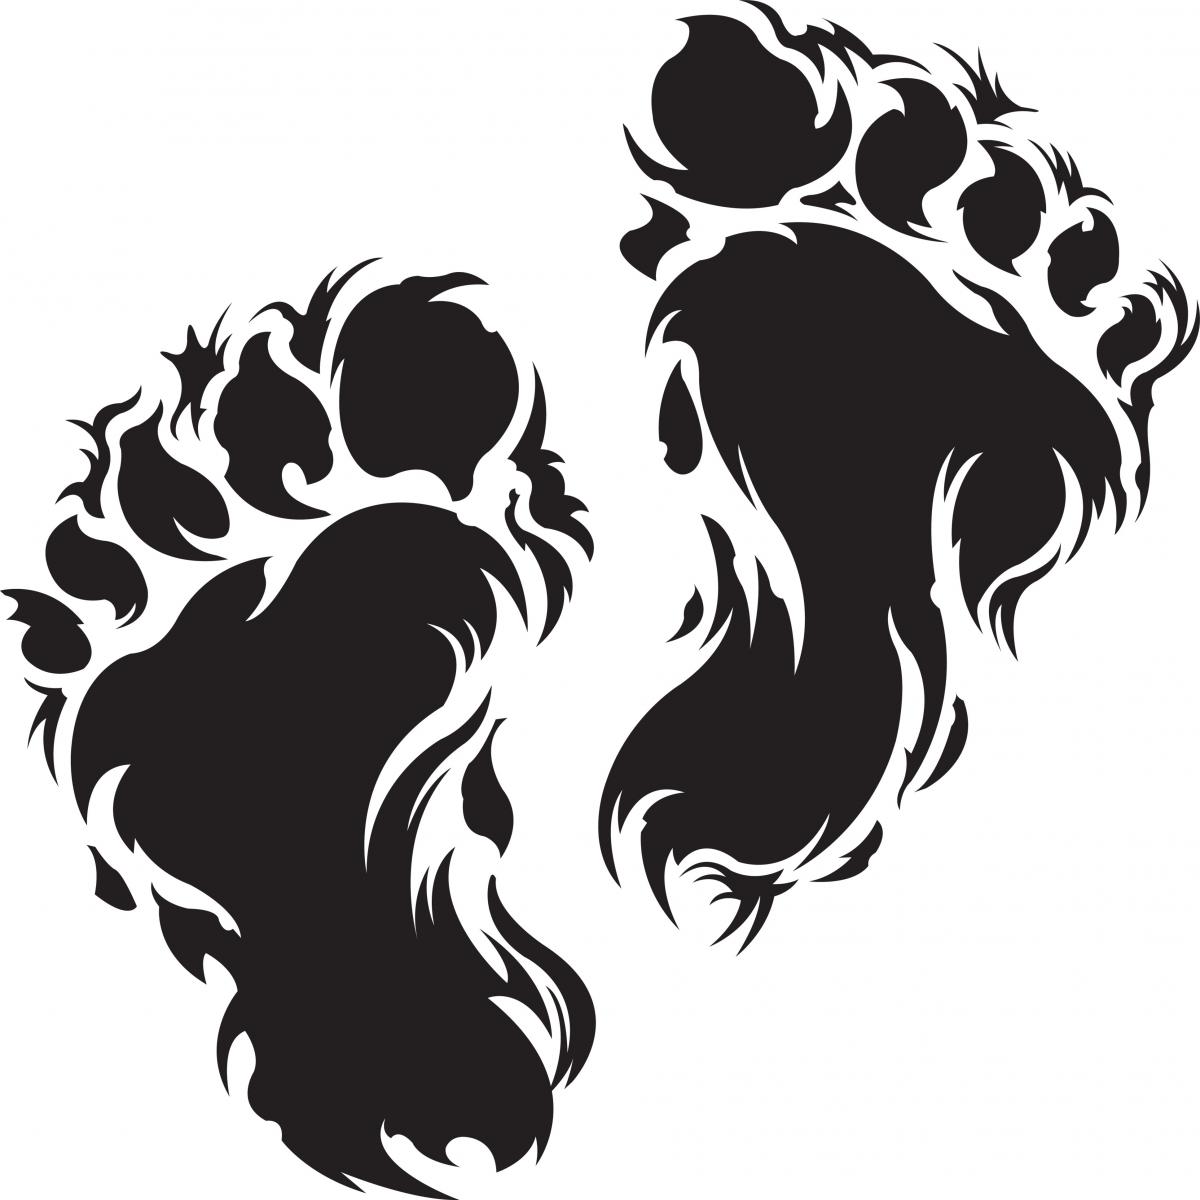 Bigfoot feet